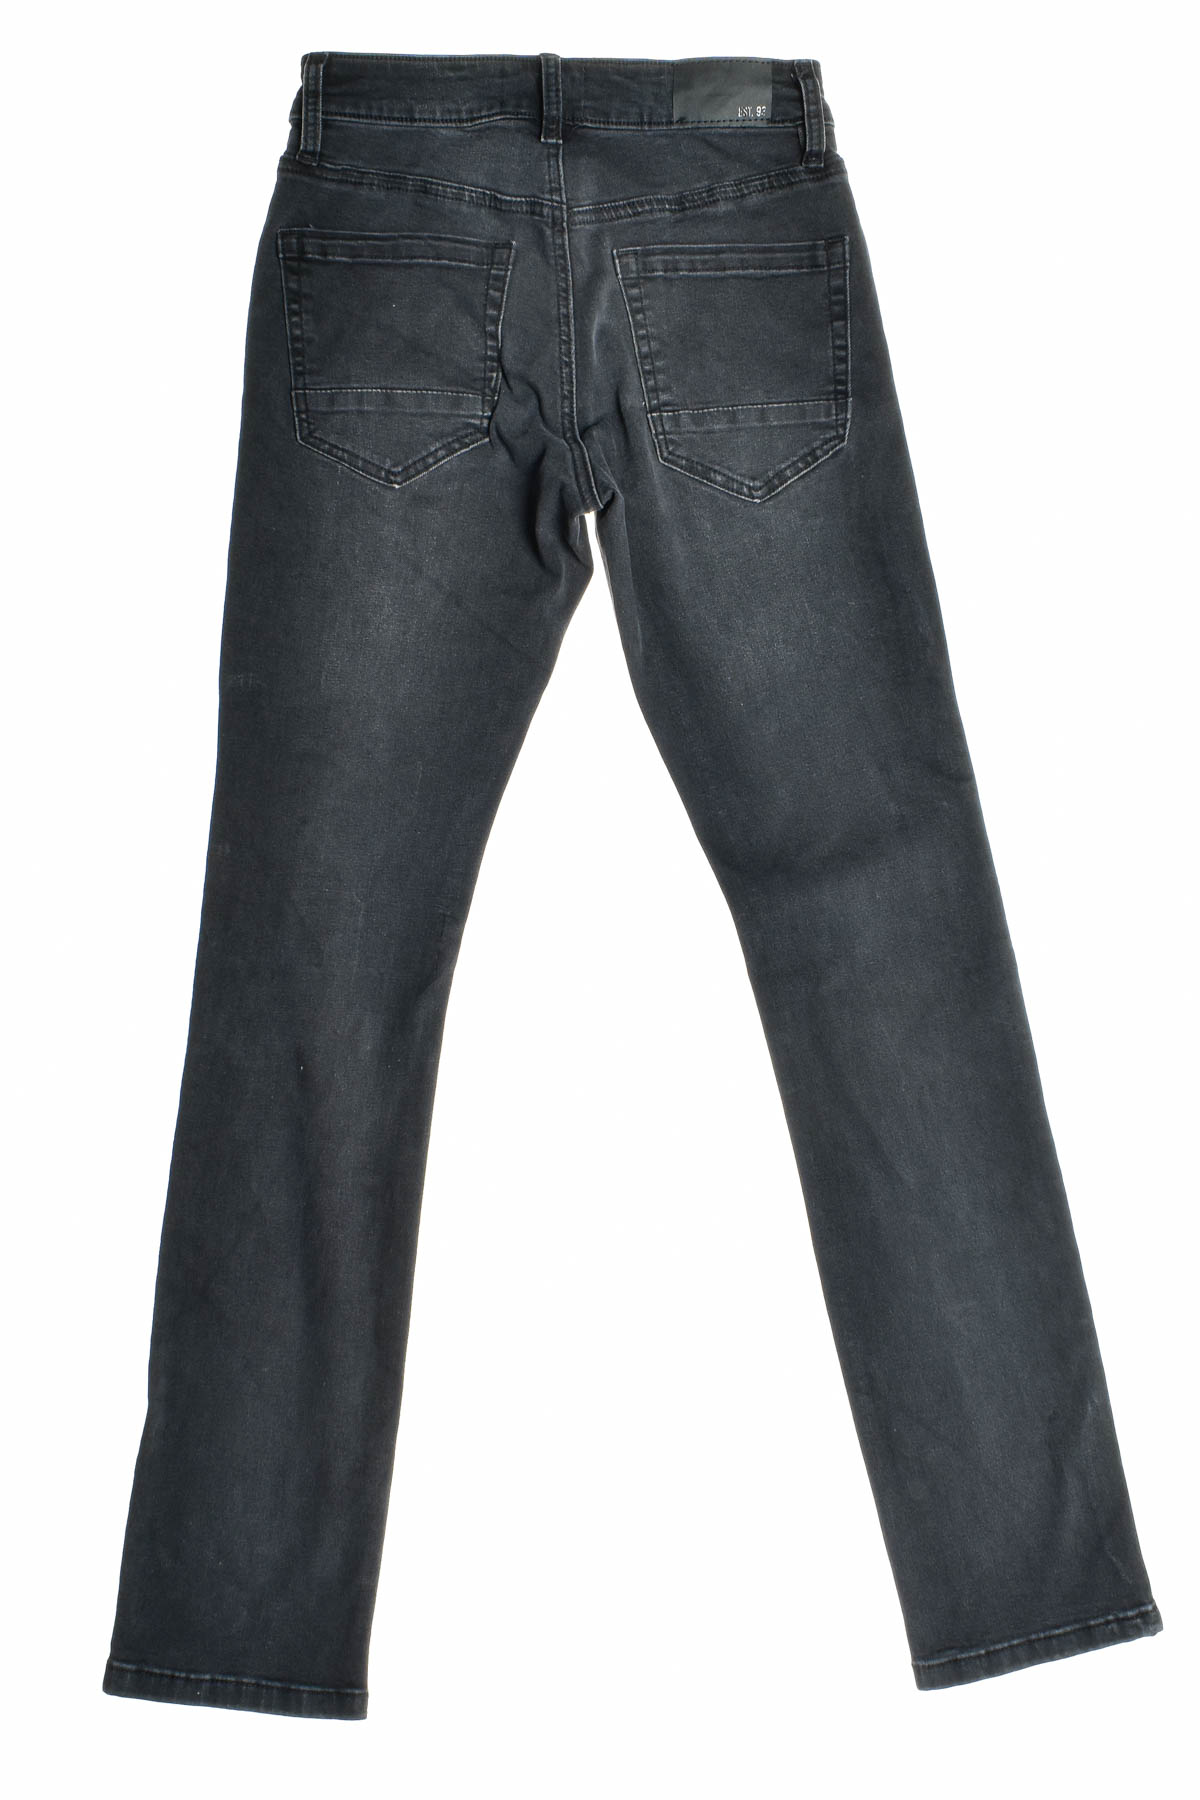 Men's jeans - Jay Jays - 1